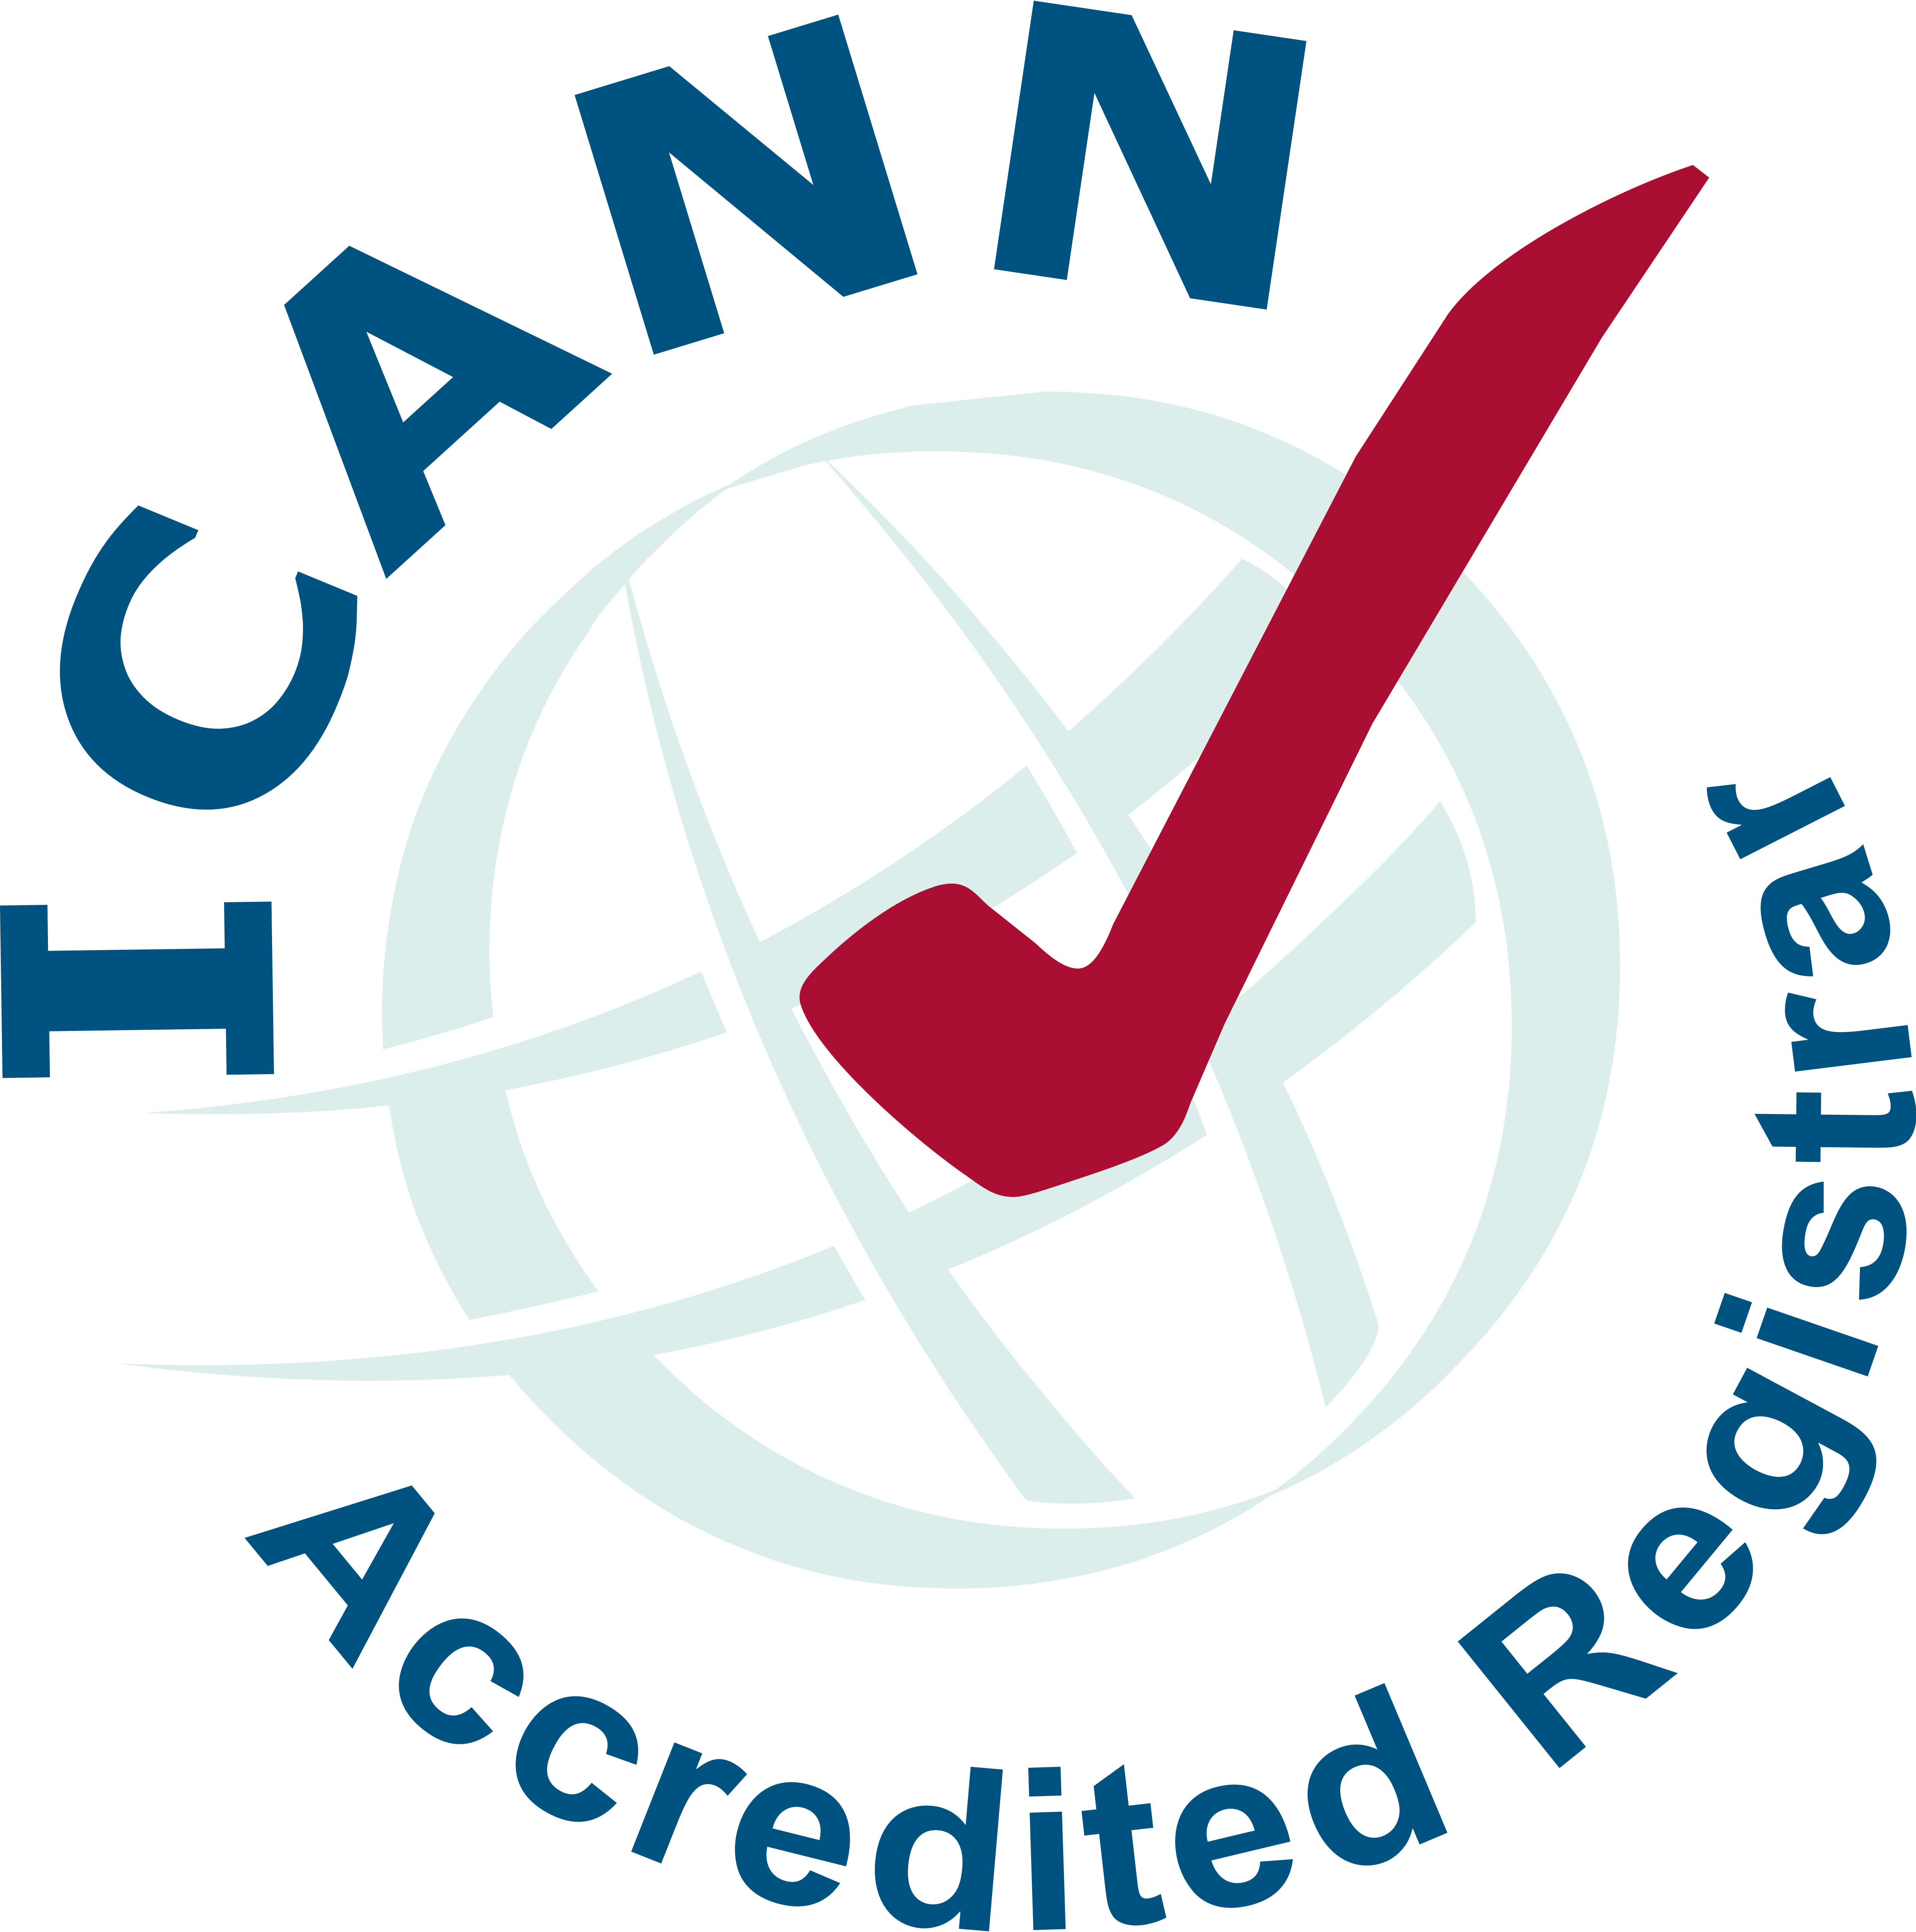 ICANN At-Large